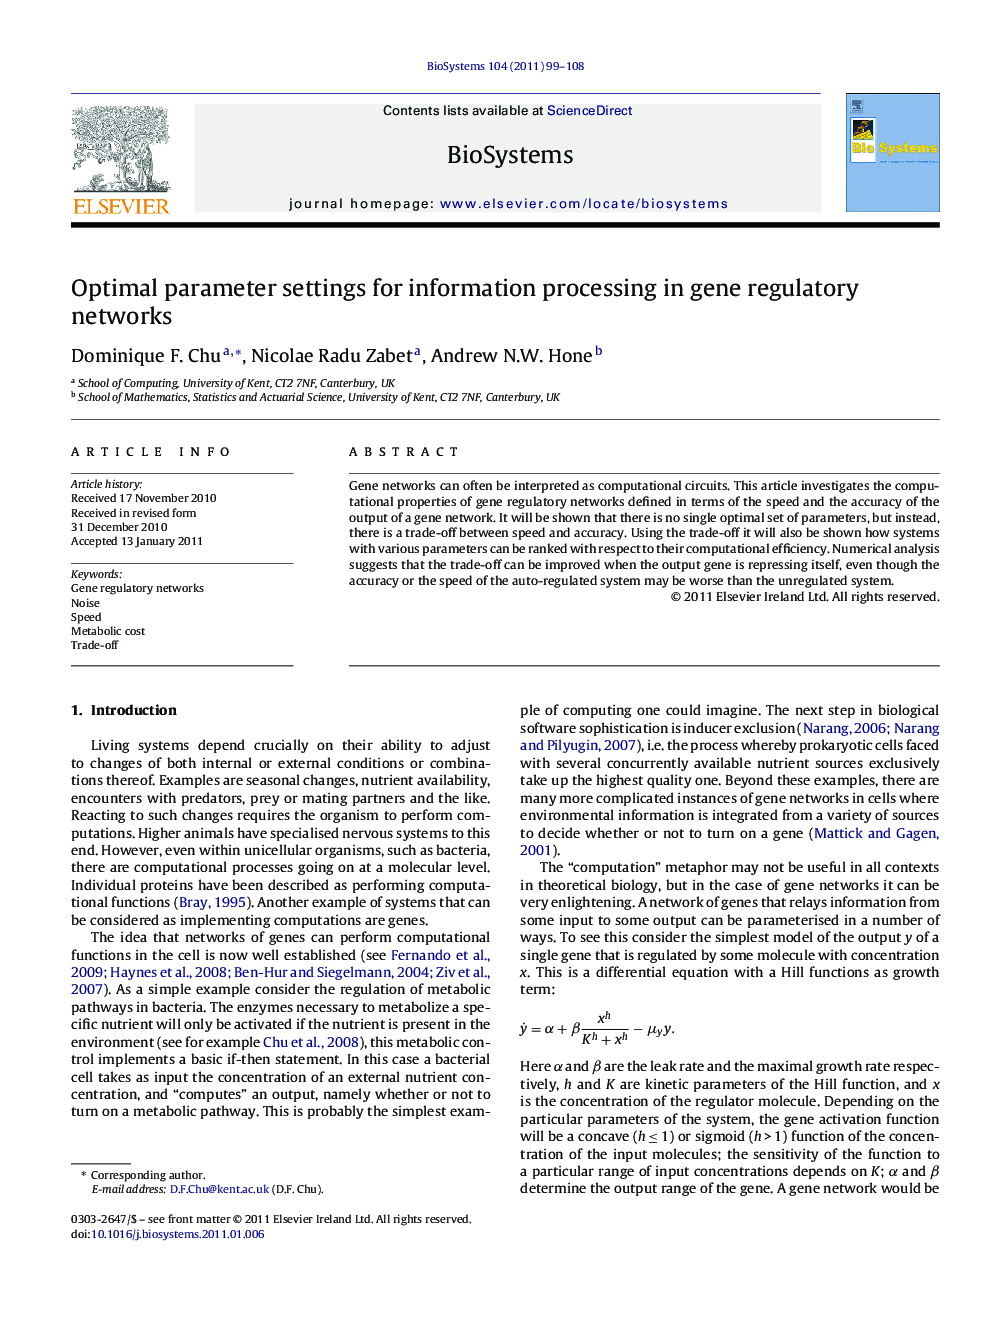 Optimal parameter settings for information processing in gene regulatory networks